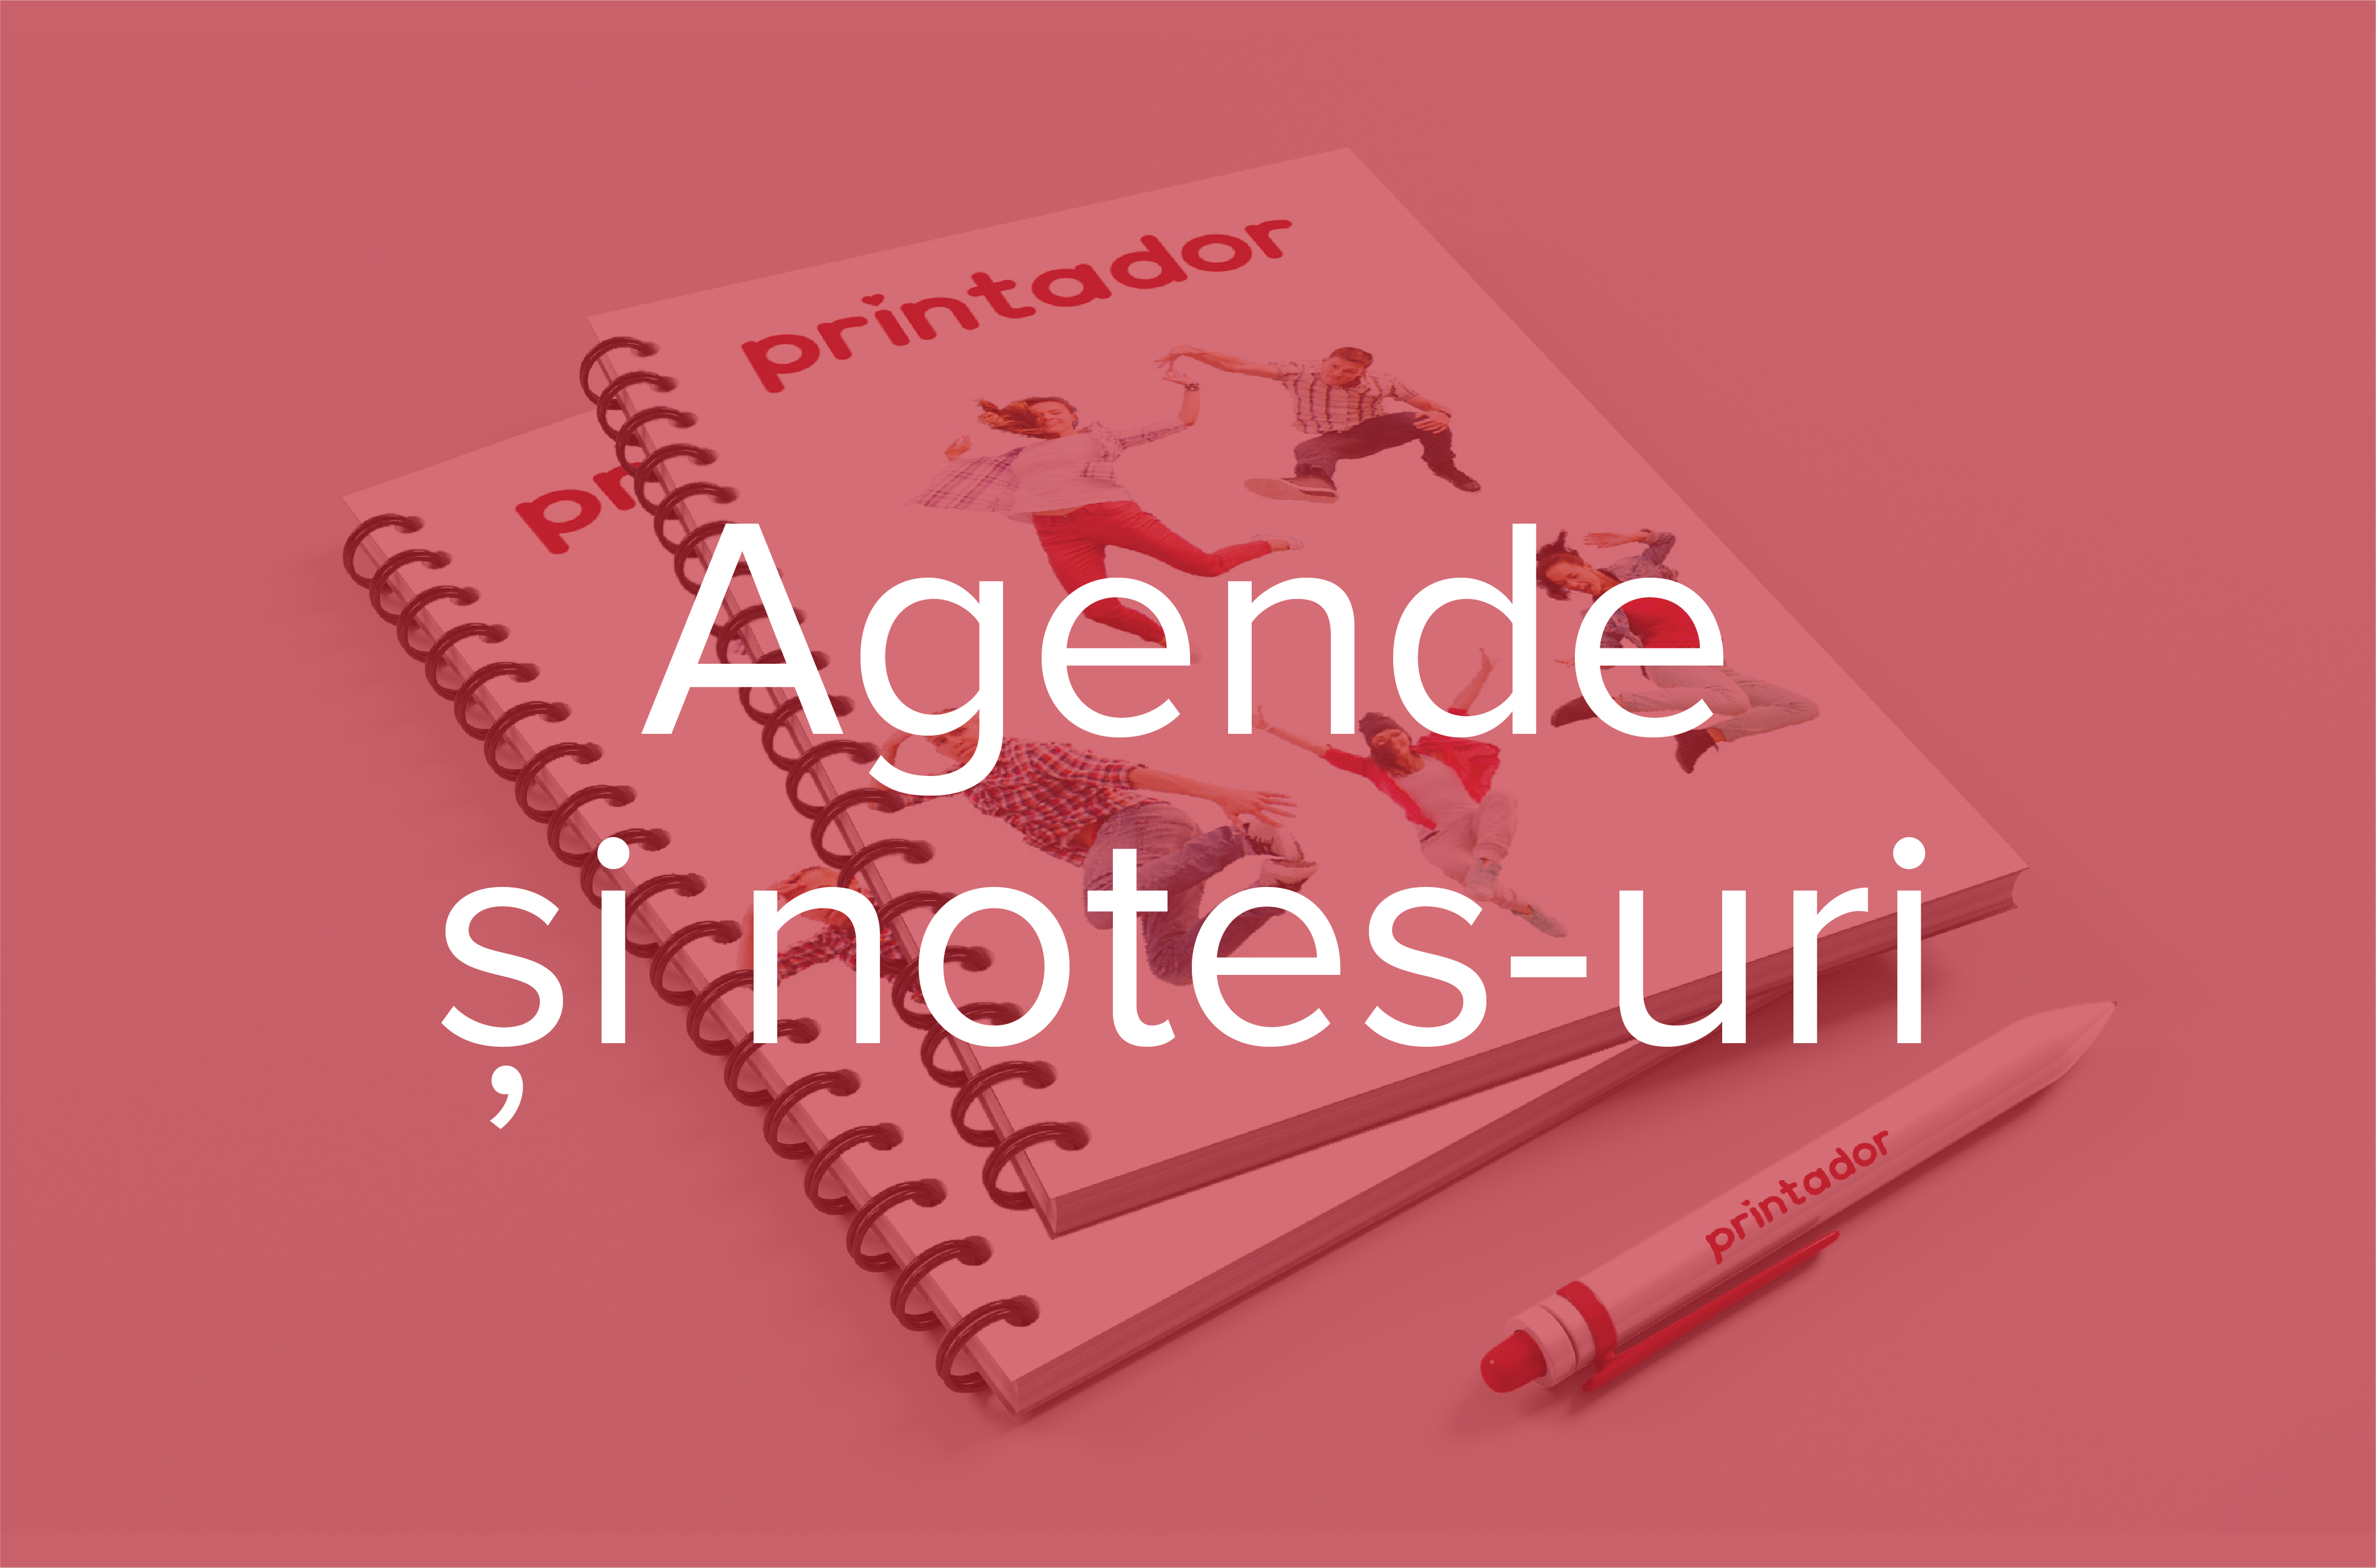 Agende și notes-uri